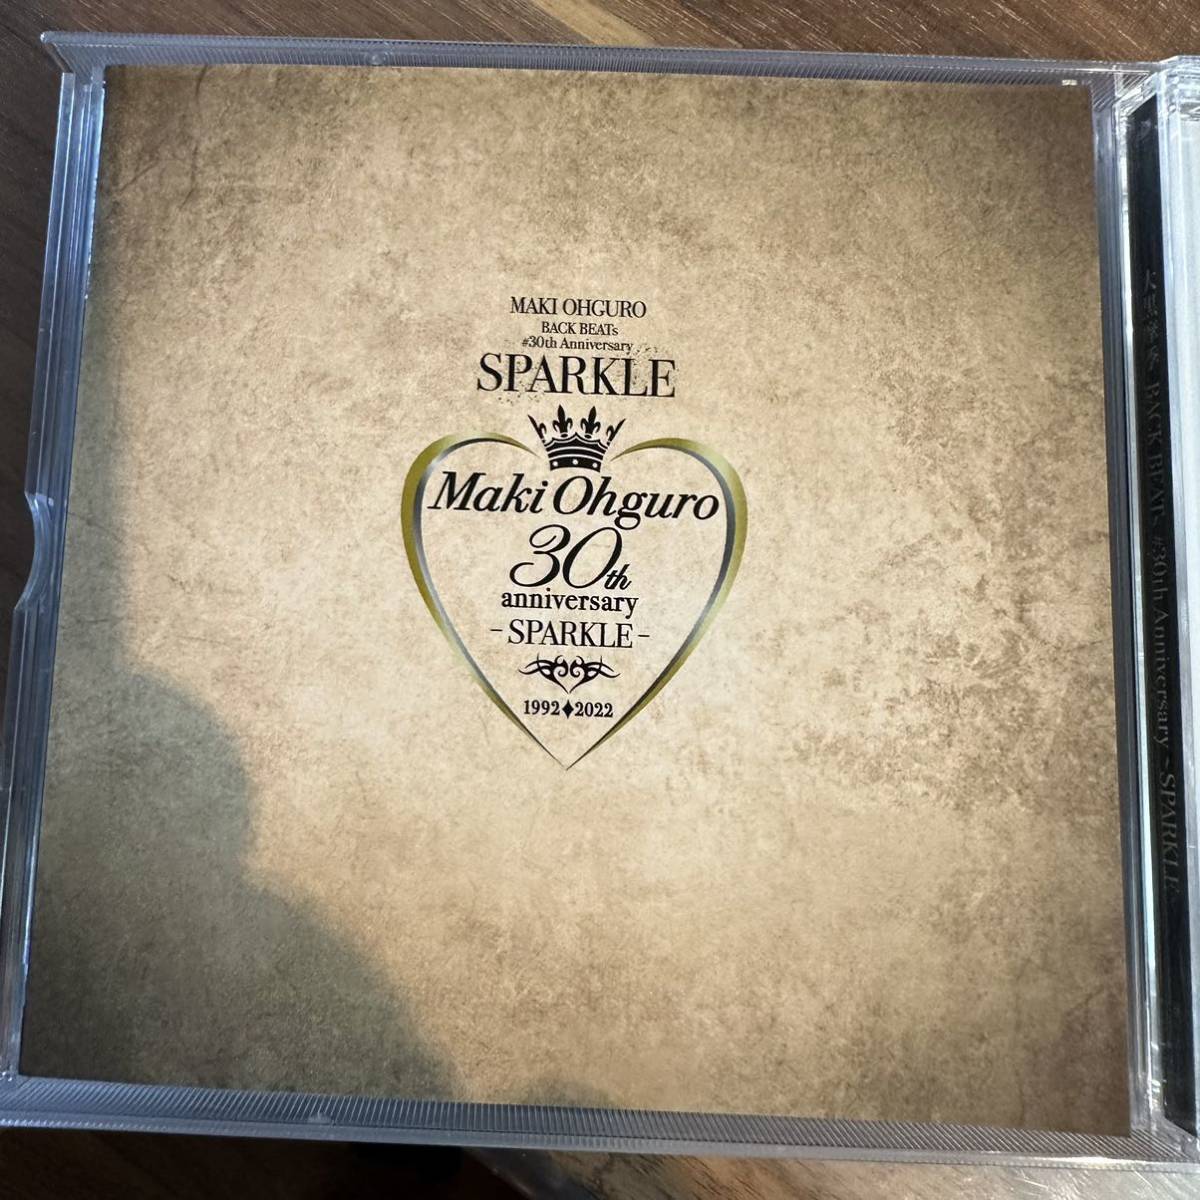 大黒摩季 BACK BEATs #30th Anniversary-SPARKLE- STANDARD盤(3CD＋DVD